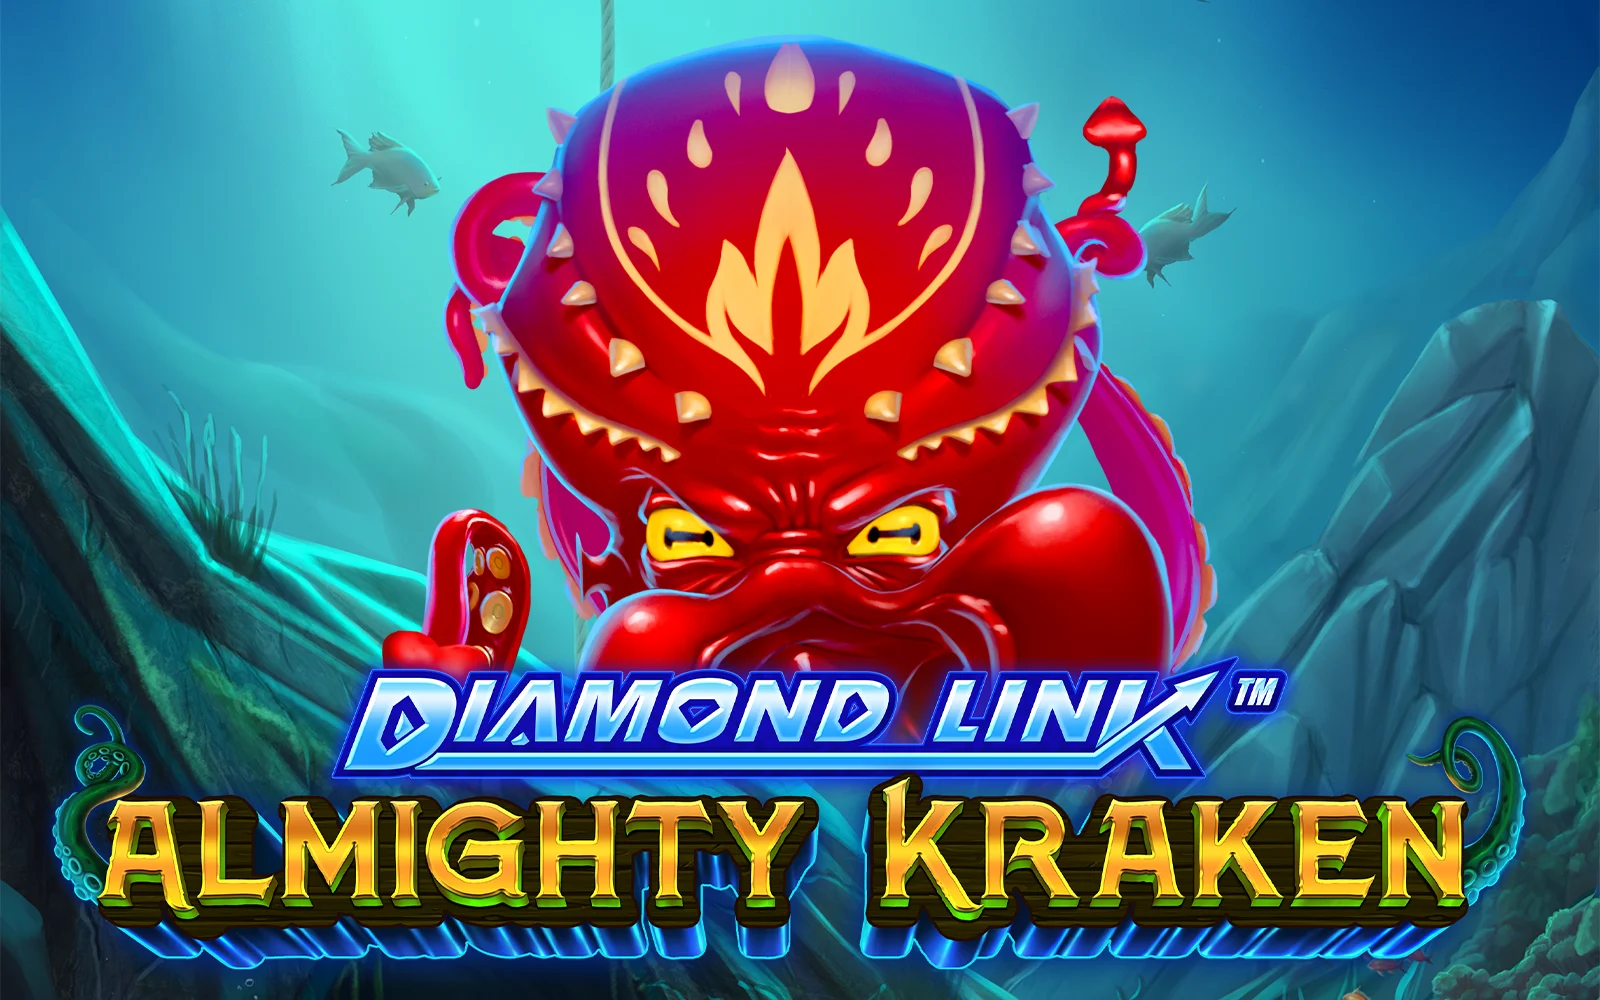 Play Diamond Link™ : Almighty Kraken on Starcasino.be online casino